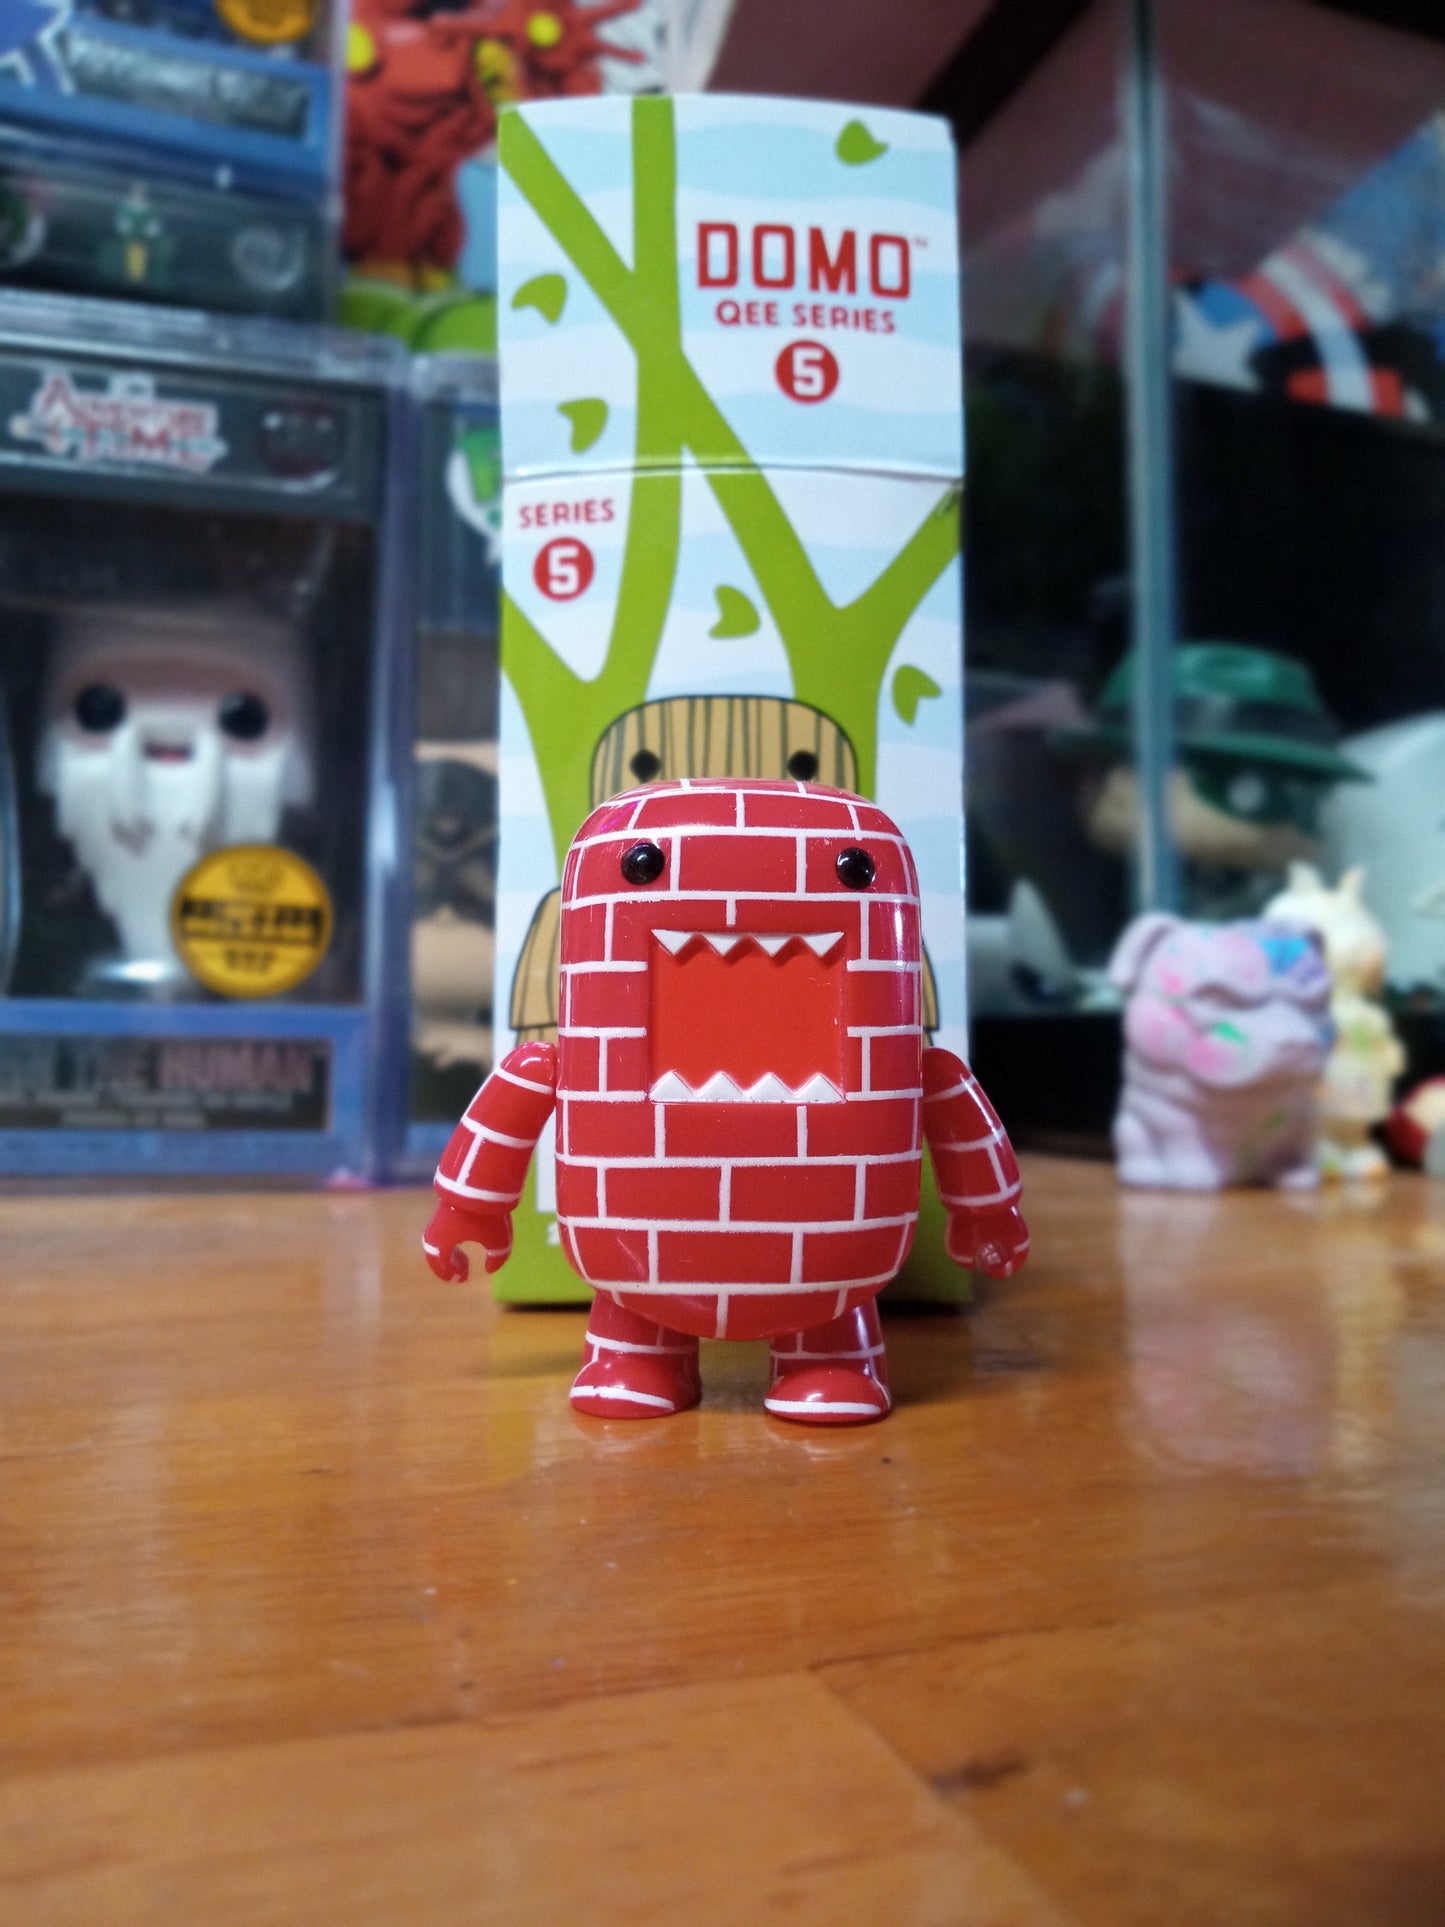 Qee Domo Series 5 - Red Brick Wall Figure